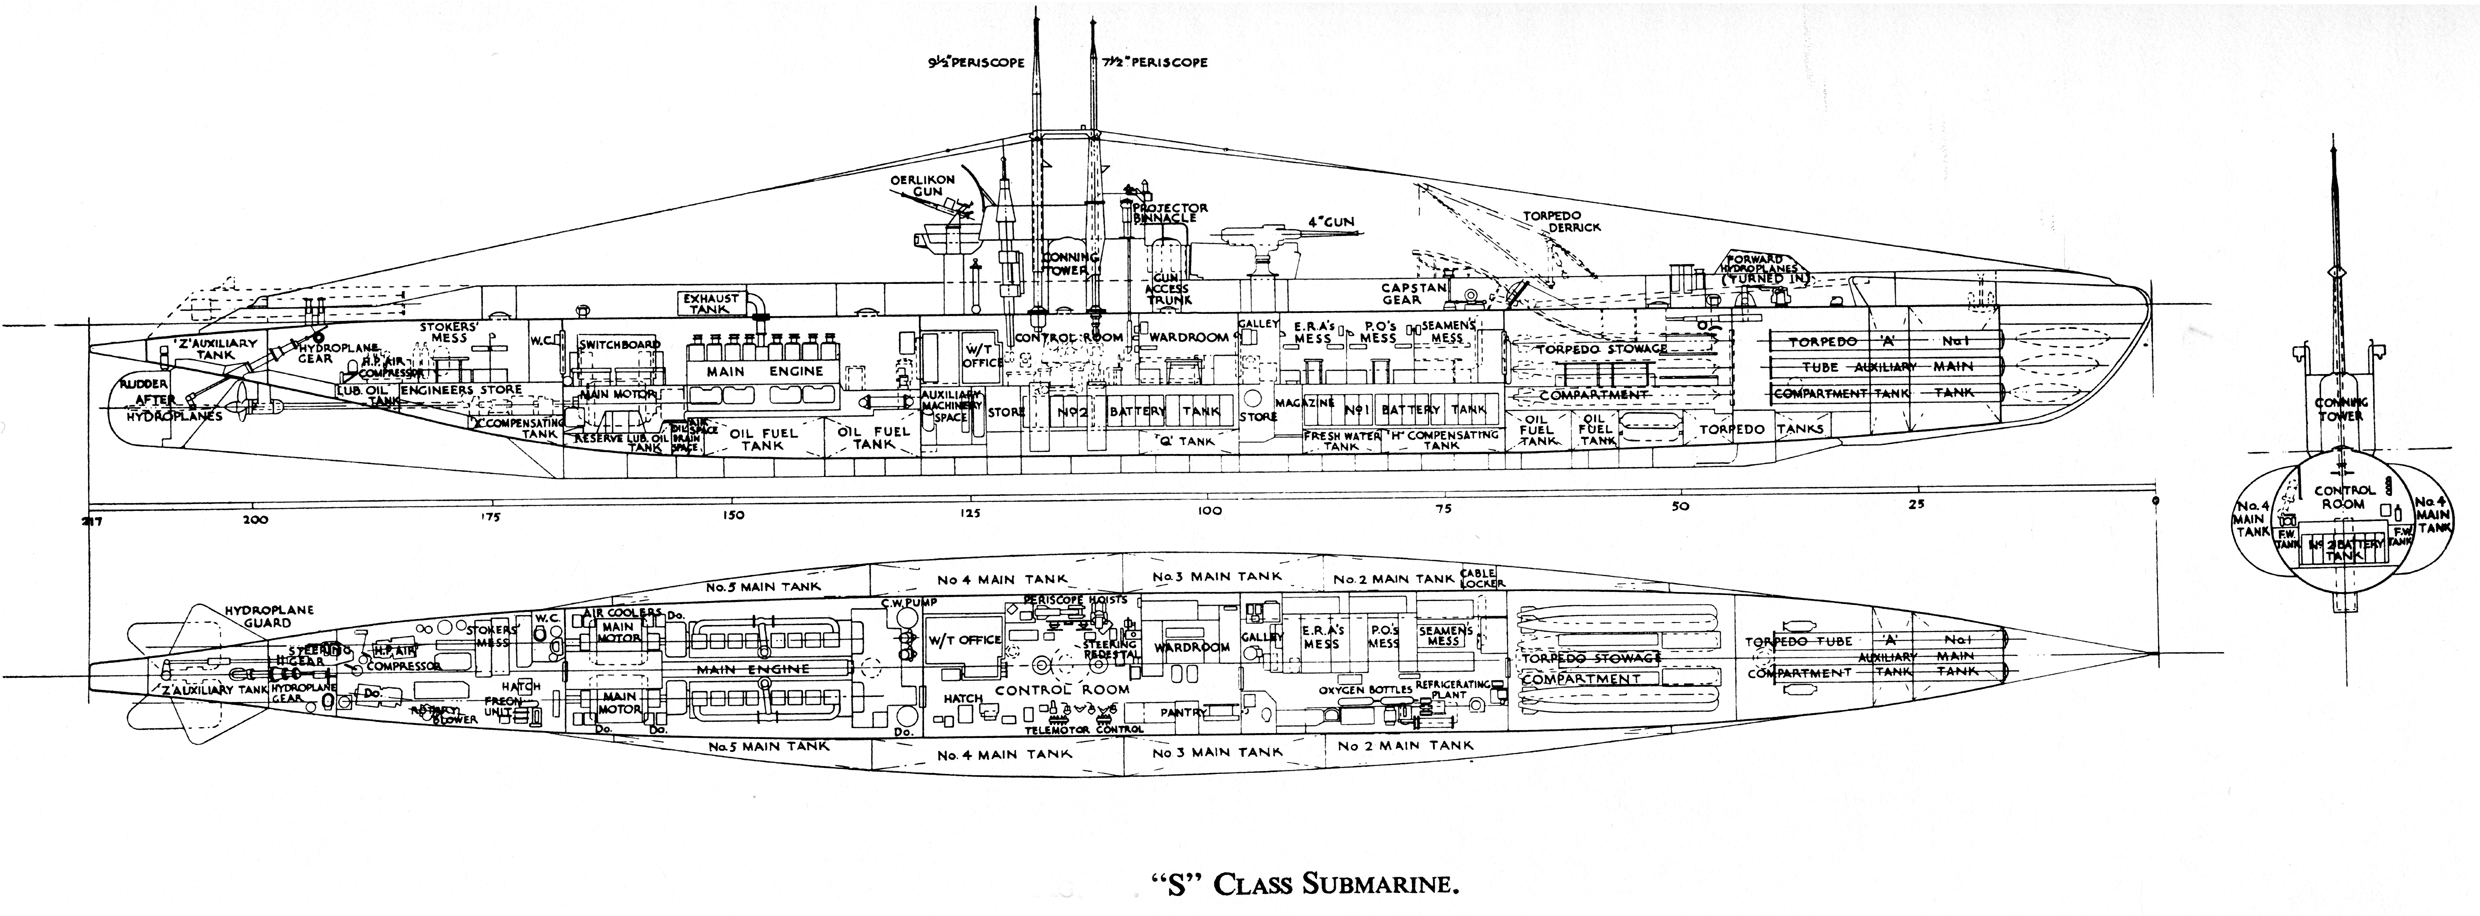 Plan de sous-marin format-A4